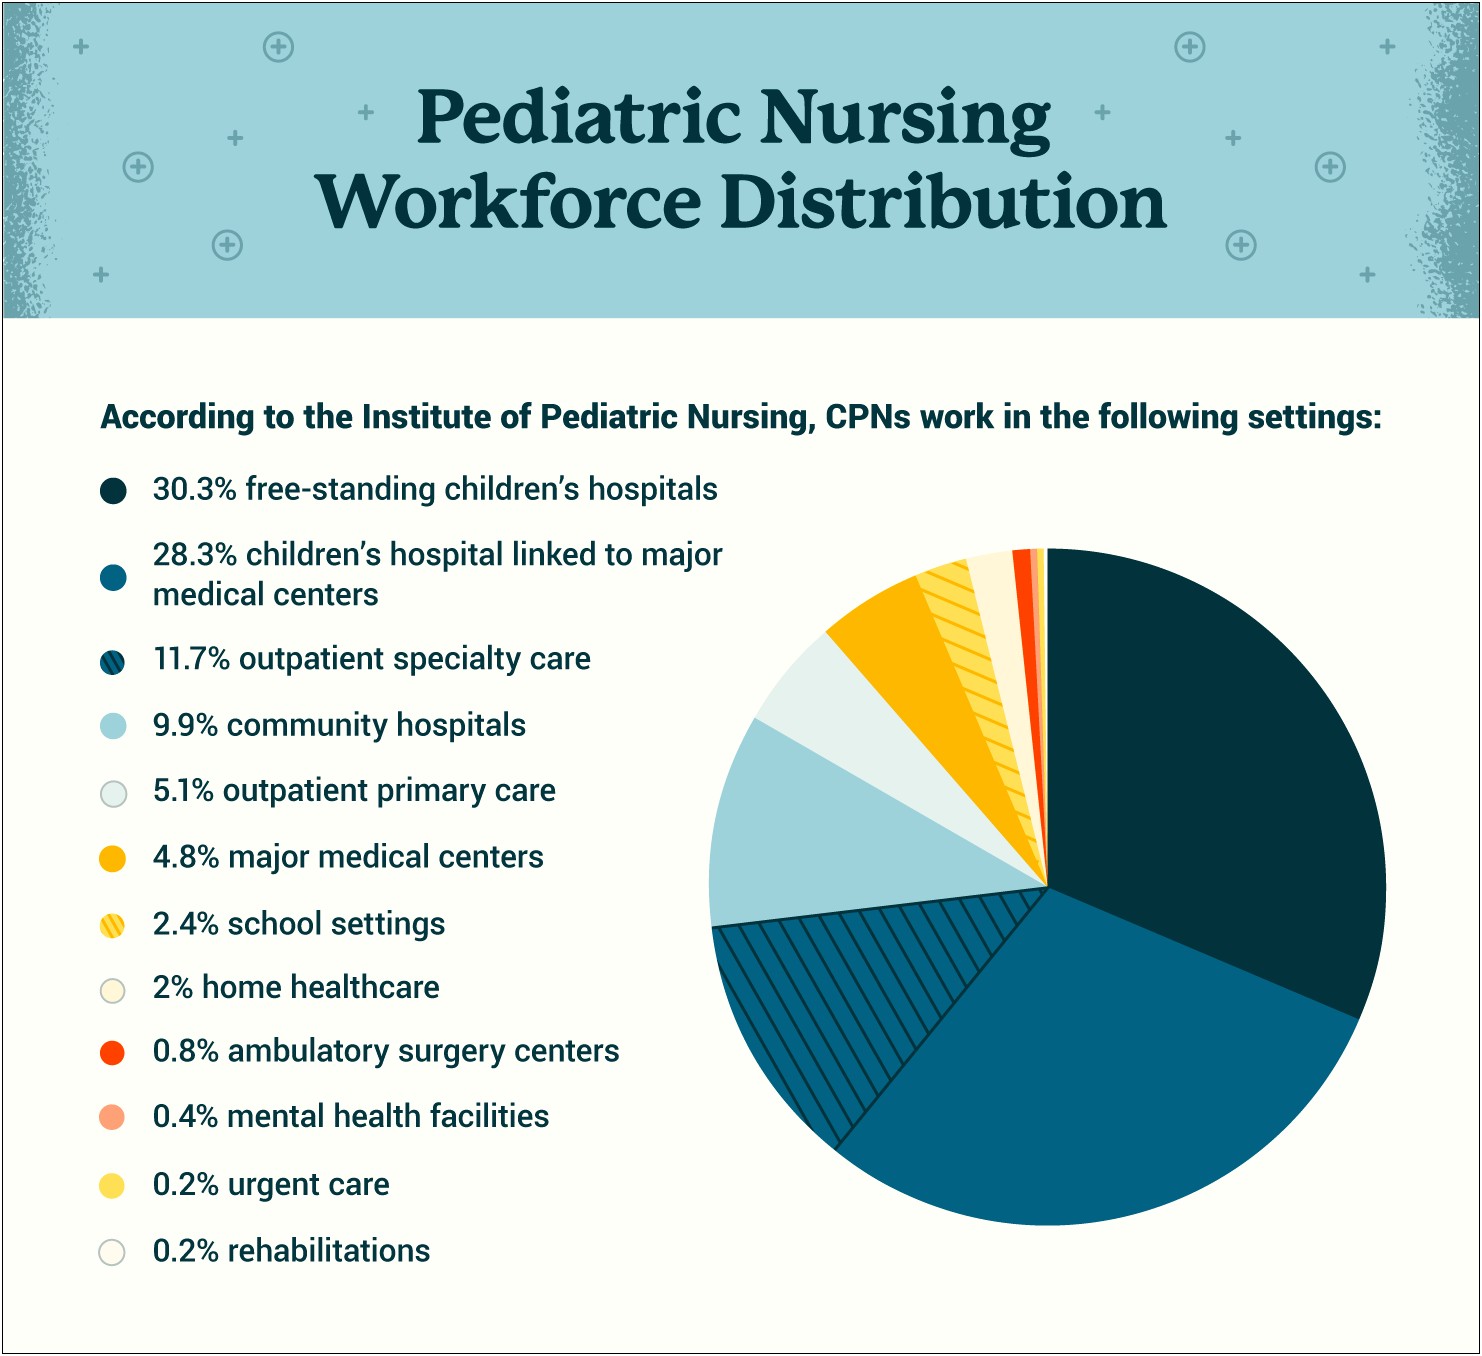 Nursing School Pediatric Clinical Resume Description